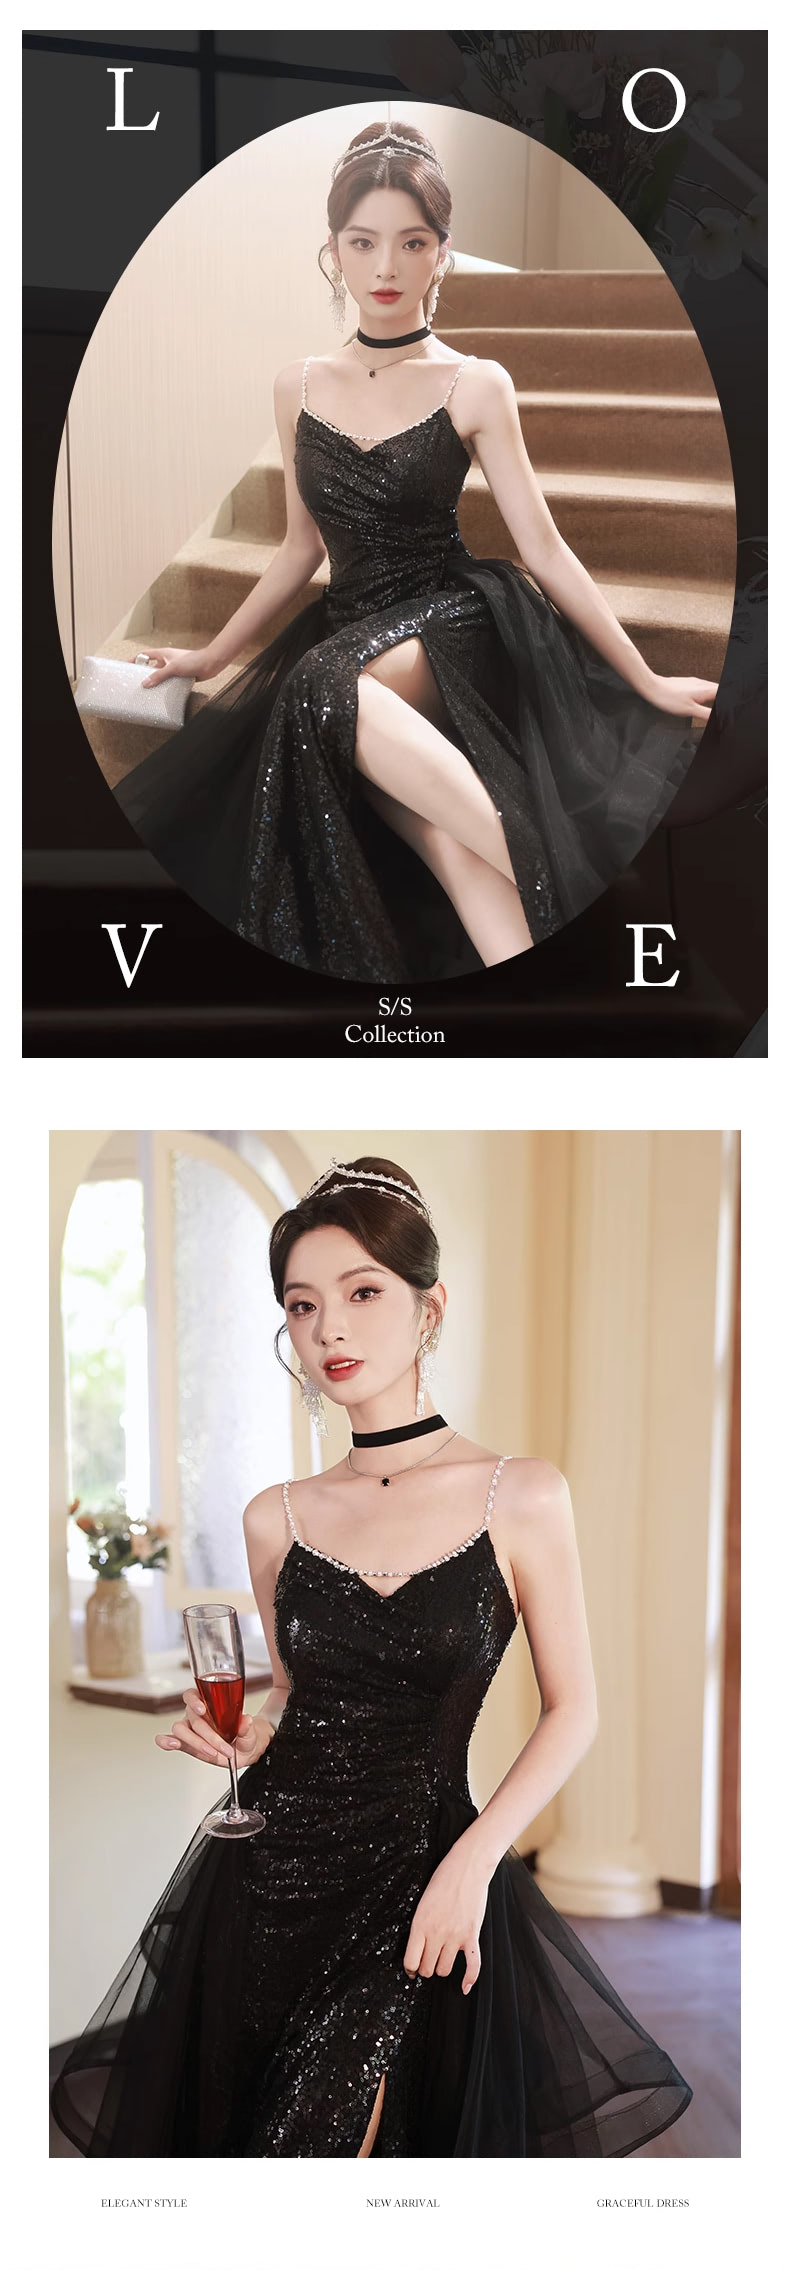 Luxury-Black-Banquet-Party-Evening-Long-Dress-Sleeveless-Ball-Gown14